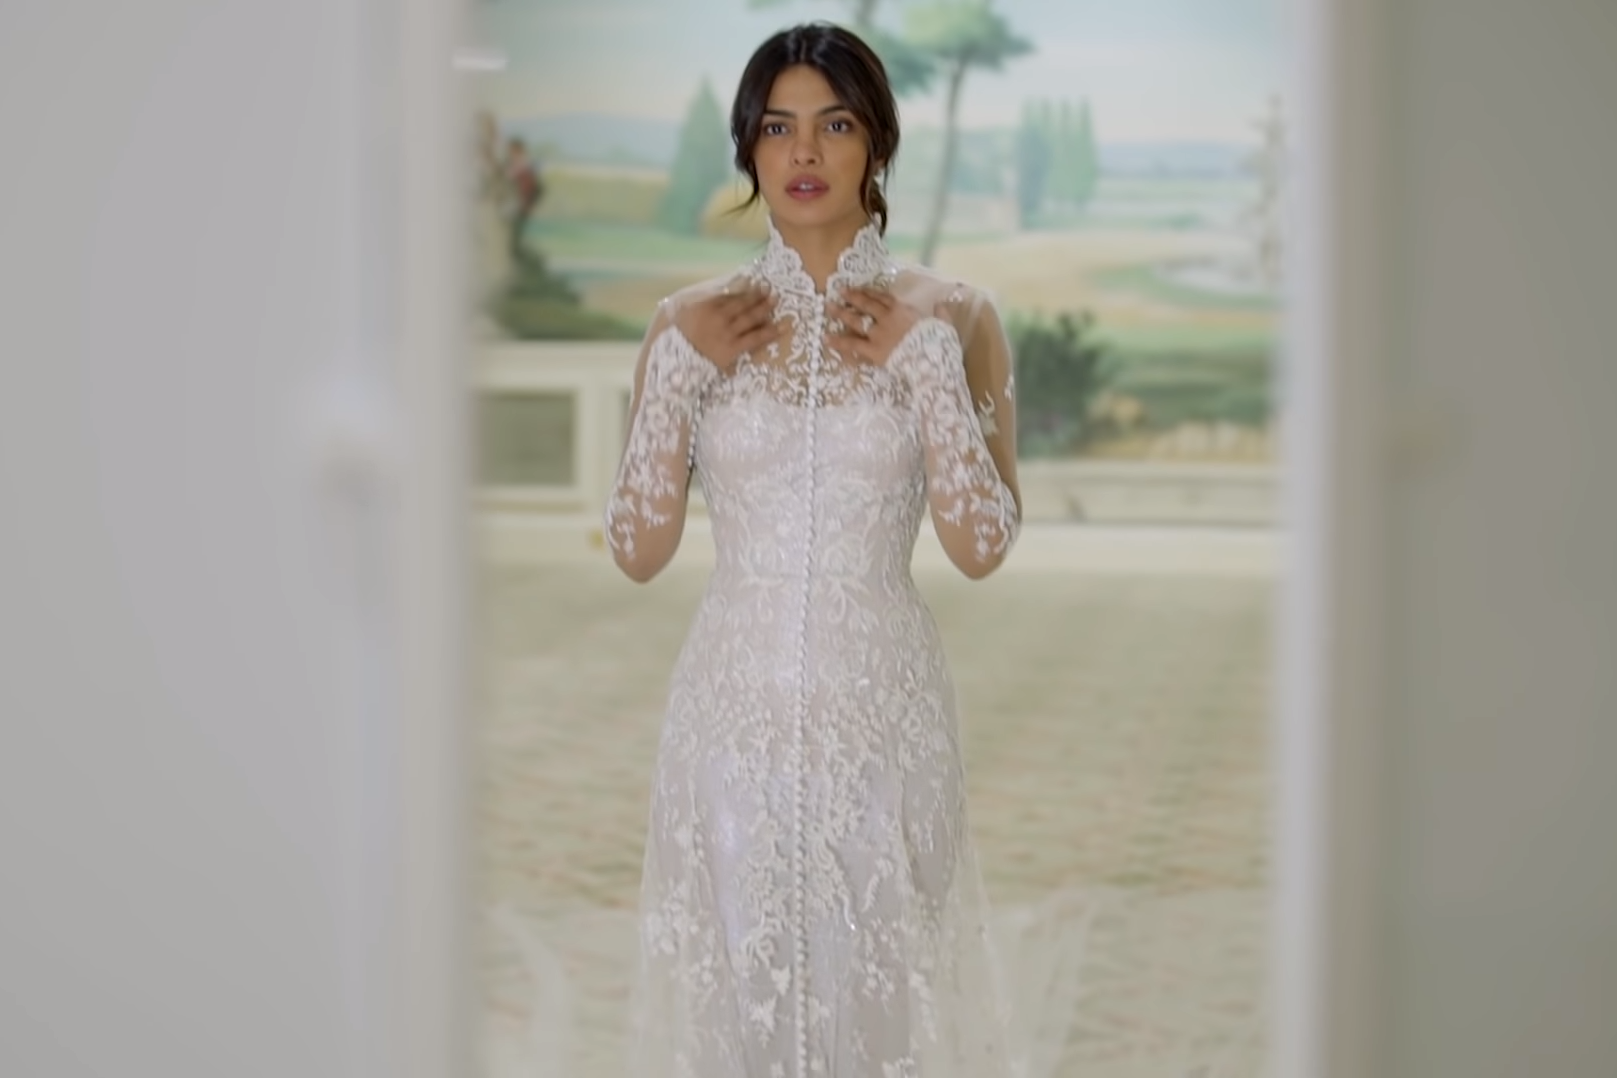 priyanka chopra wedding gown designer